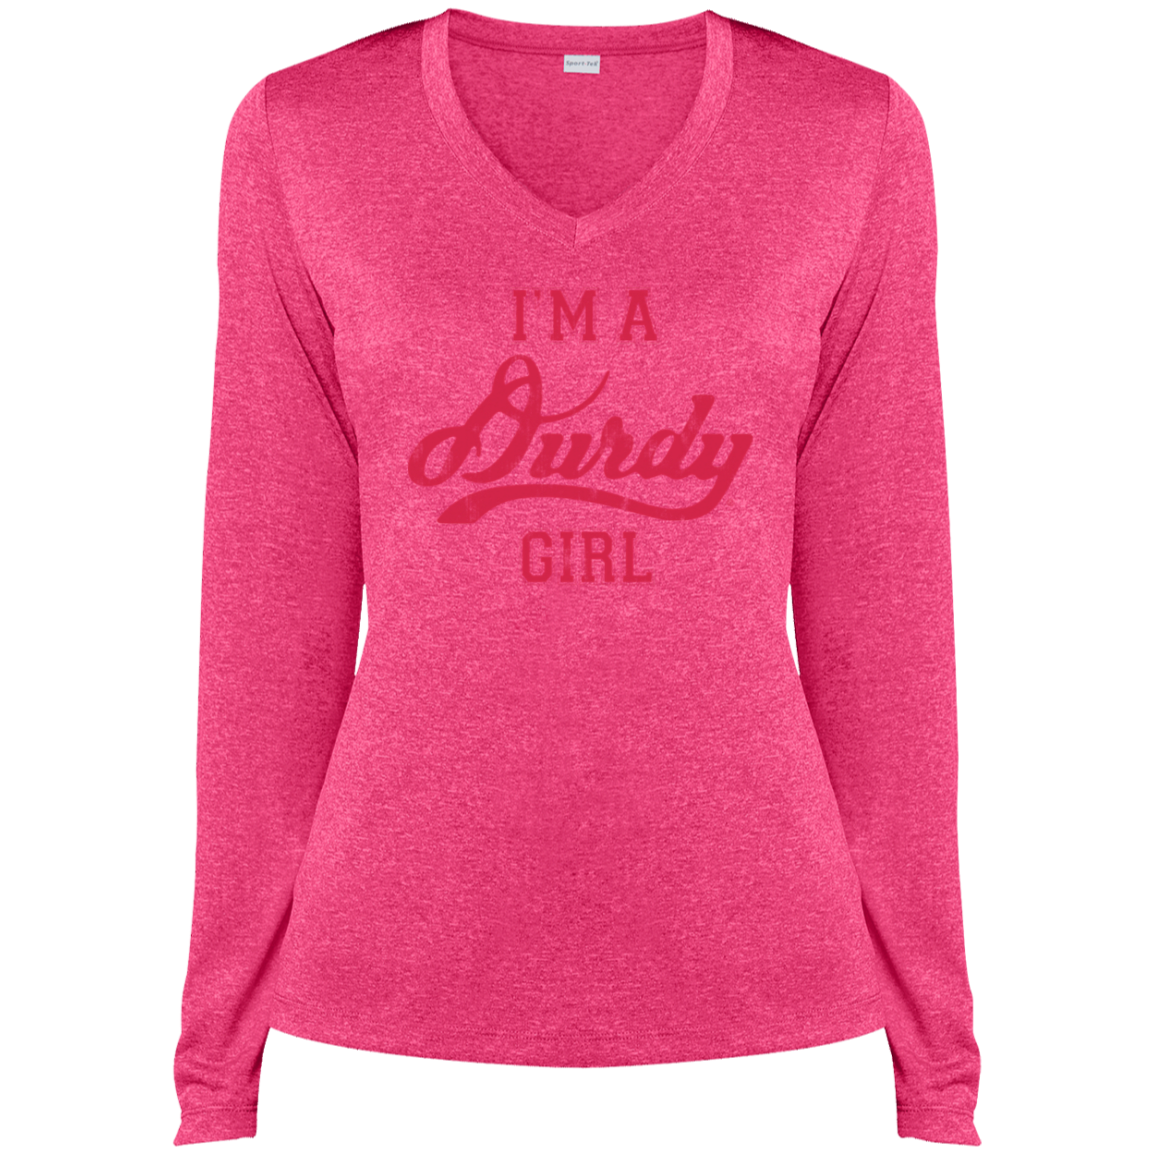 Durdy Girl Sport-Tek Ladies' LS Heather Dri-Fit V-Neck T-Shirt